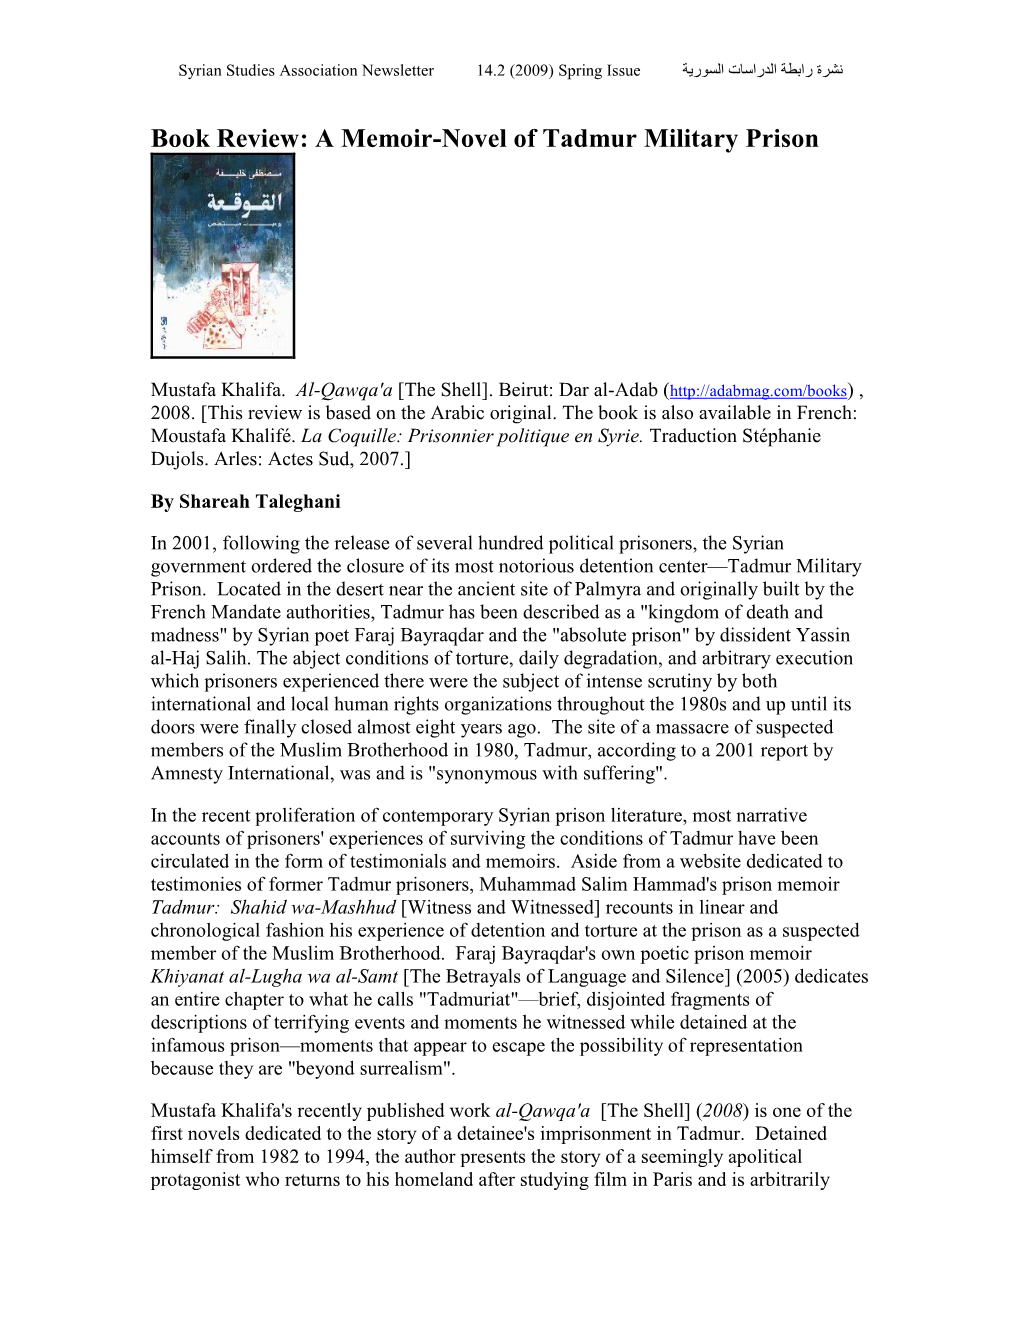 Book Review: Mustafa Khalifa's the Shell: Diary of a Voyeur (2008)